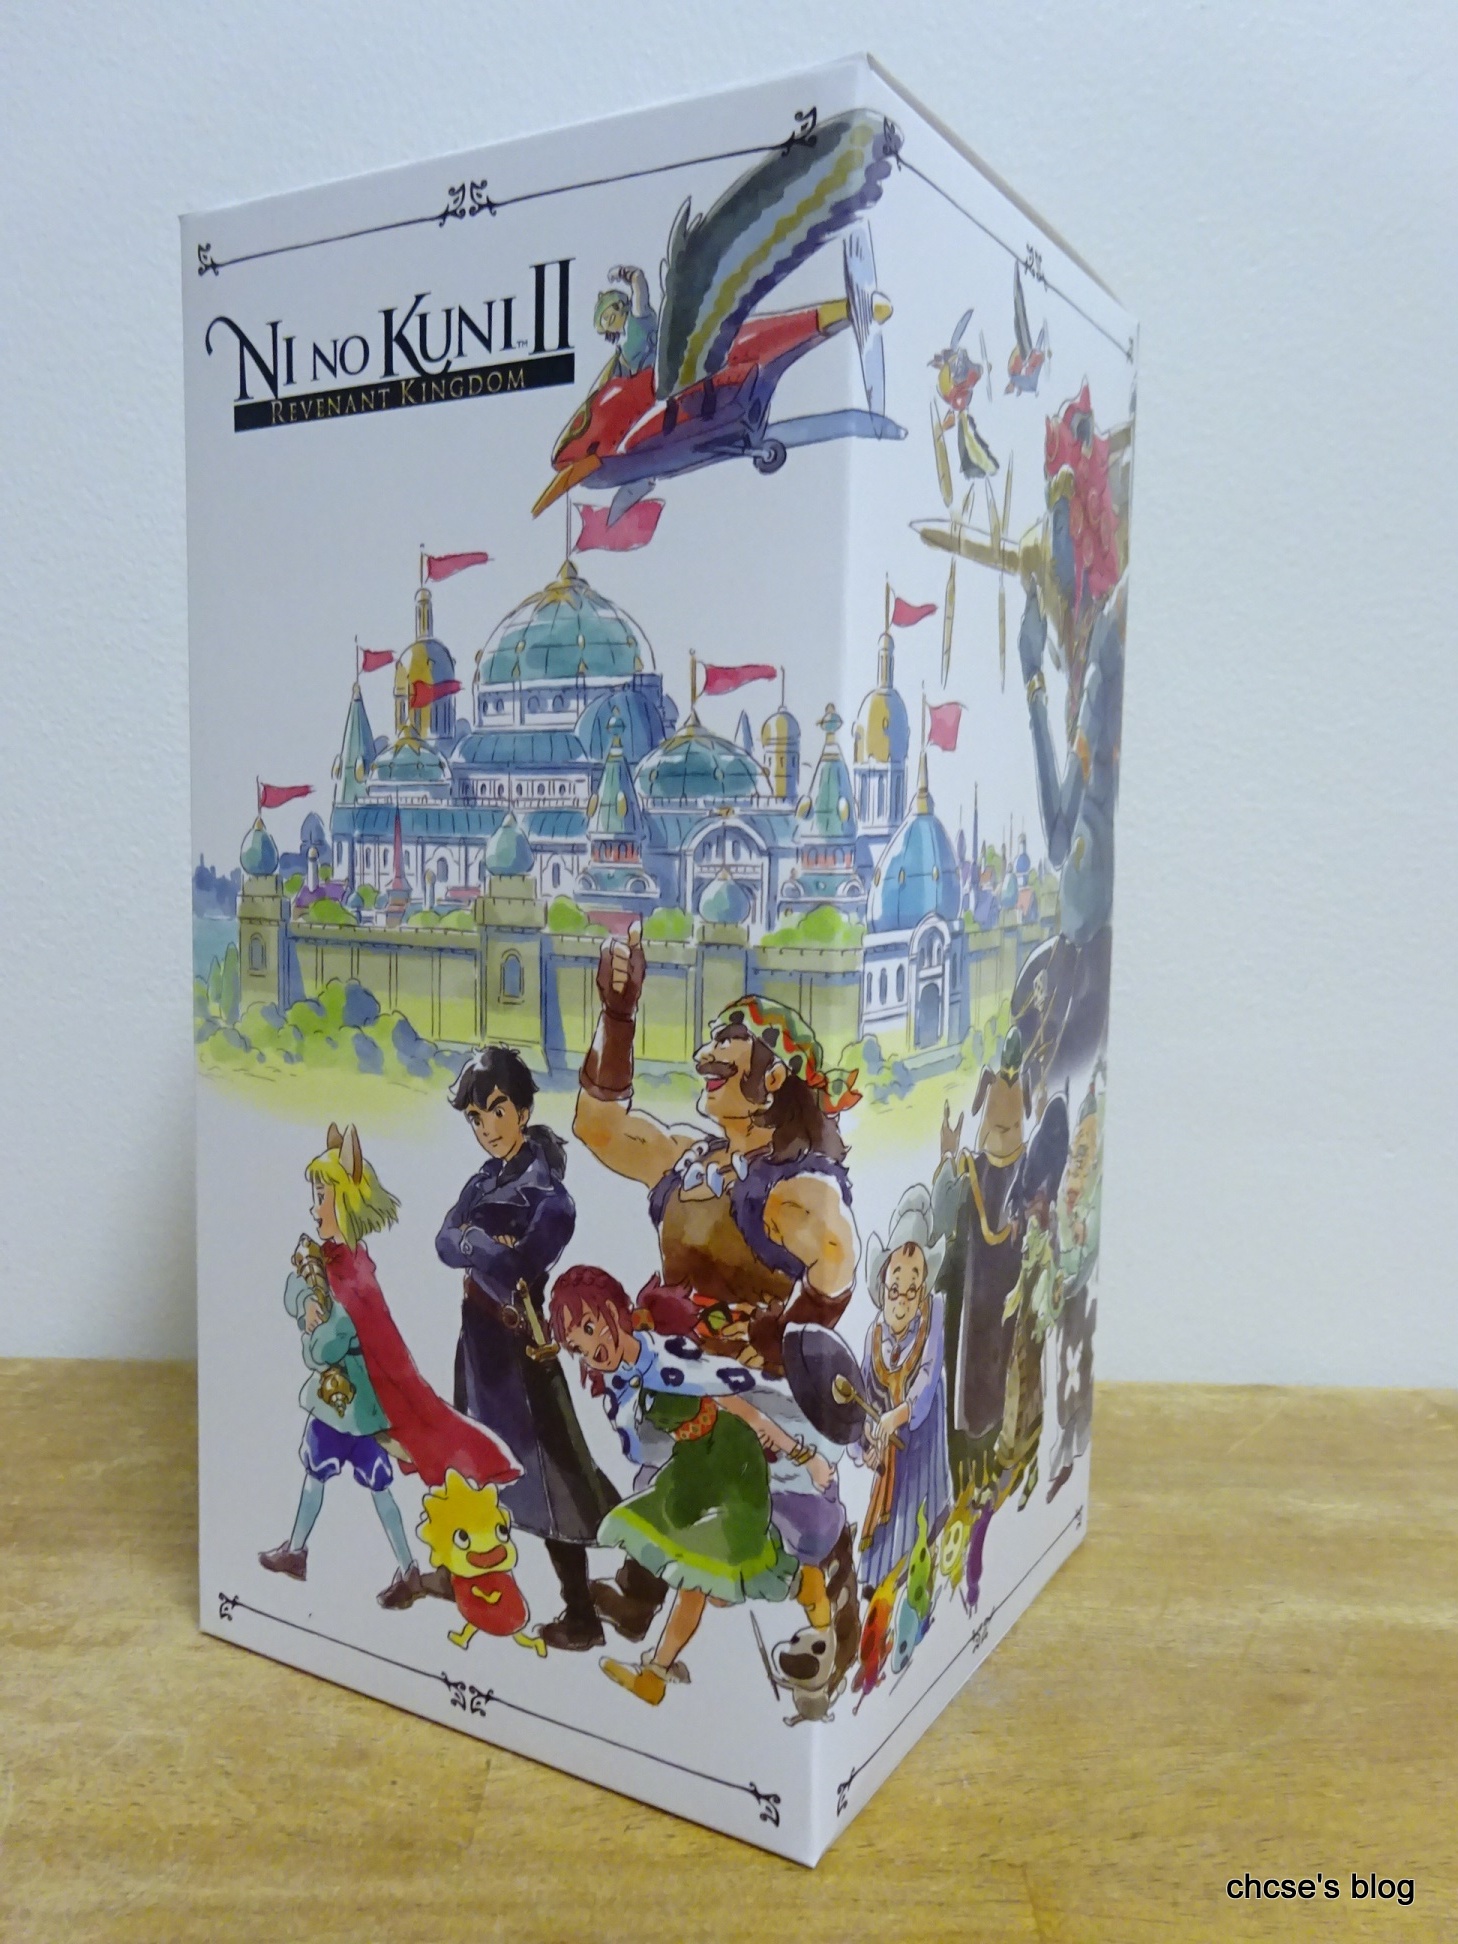 Ni No Kuni II Revenant Kingdom: The Complete Guide & Walkthrough eBook by  Tam Ha - EPUB Book